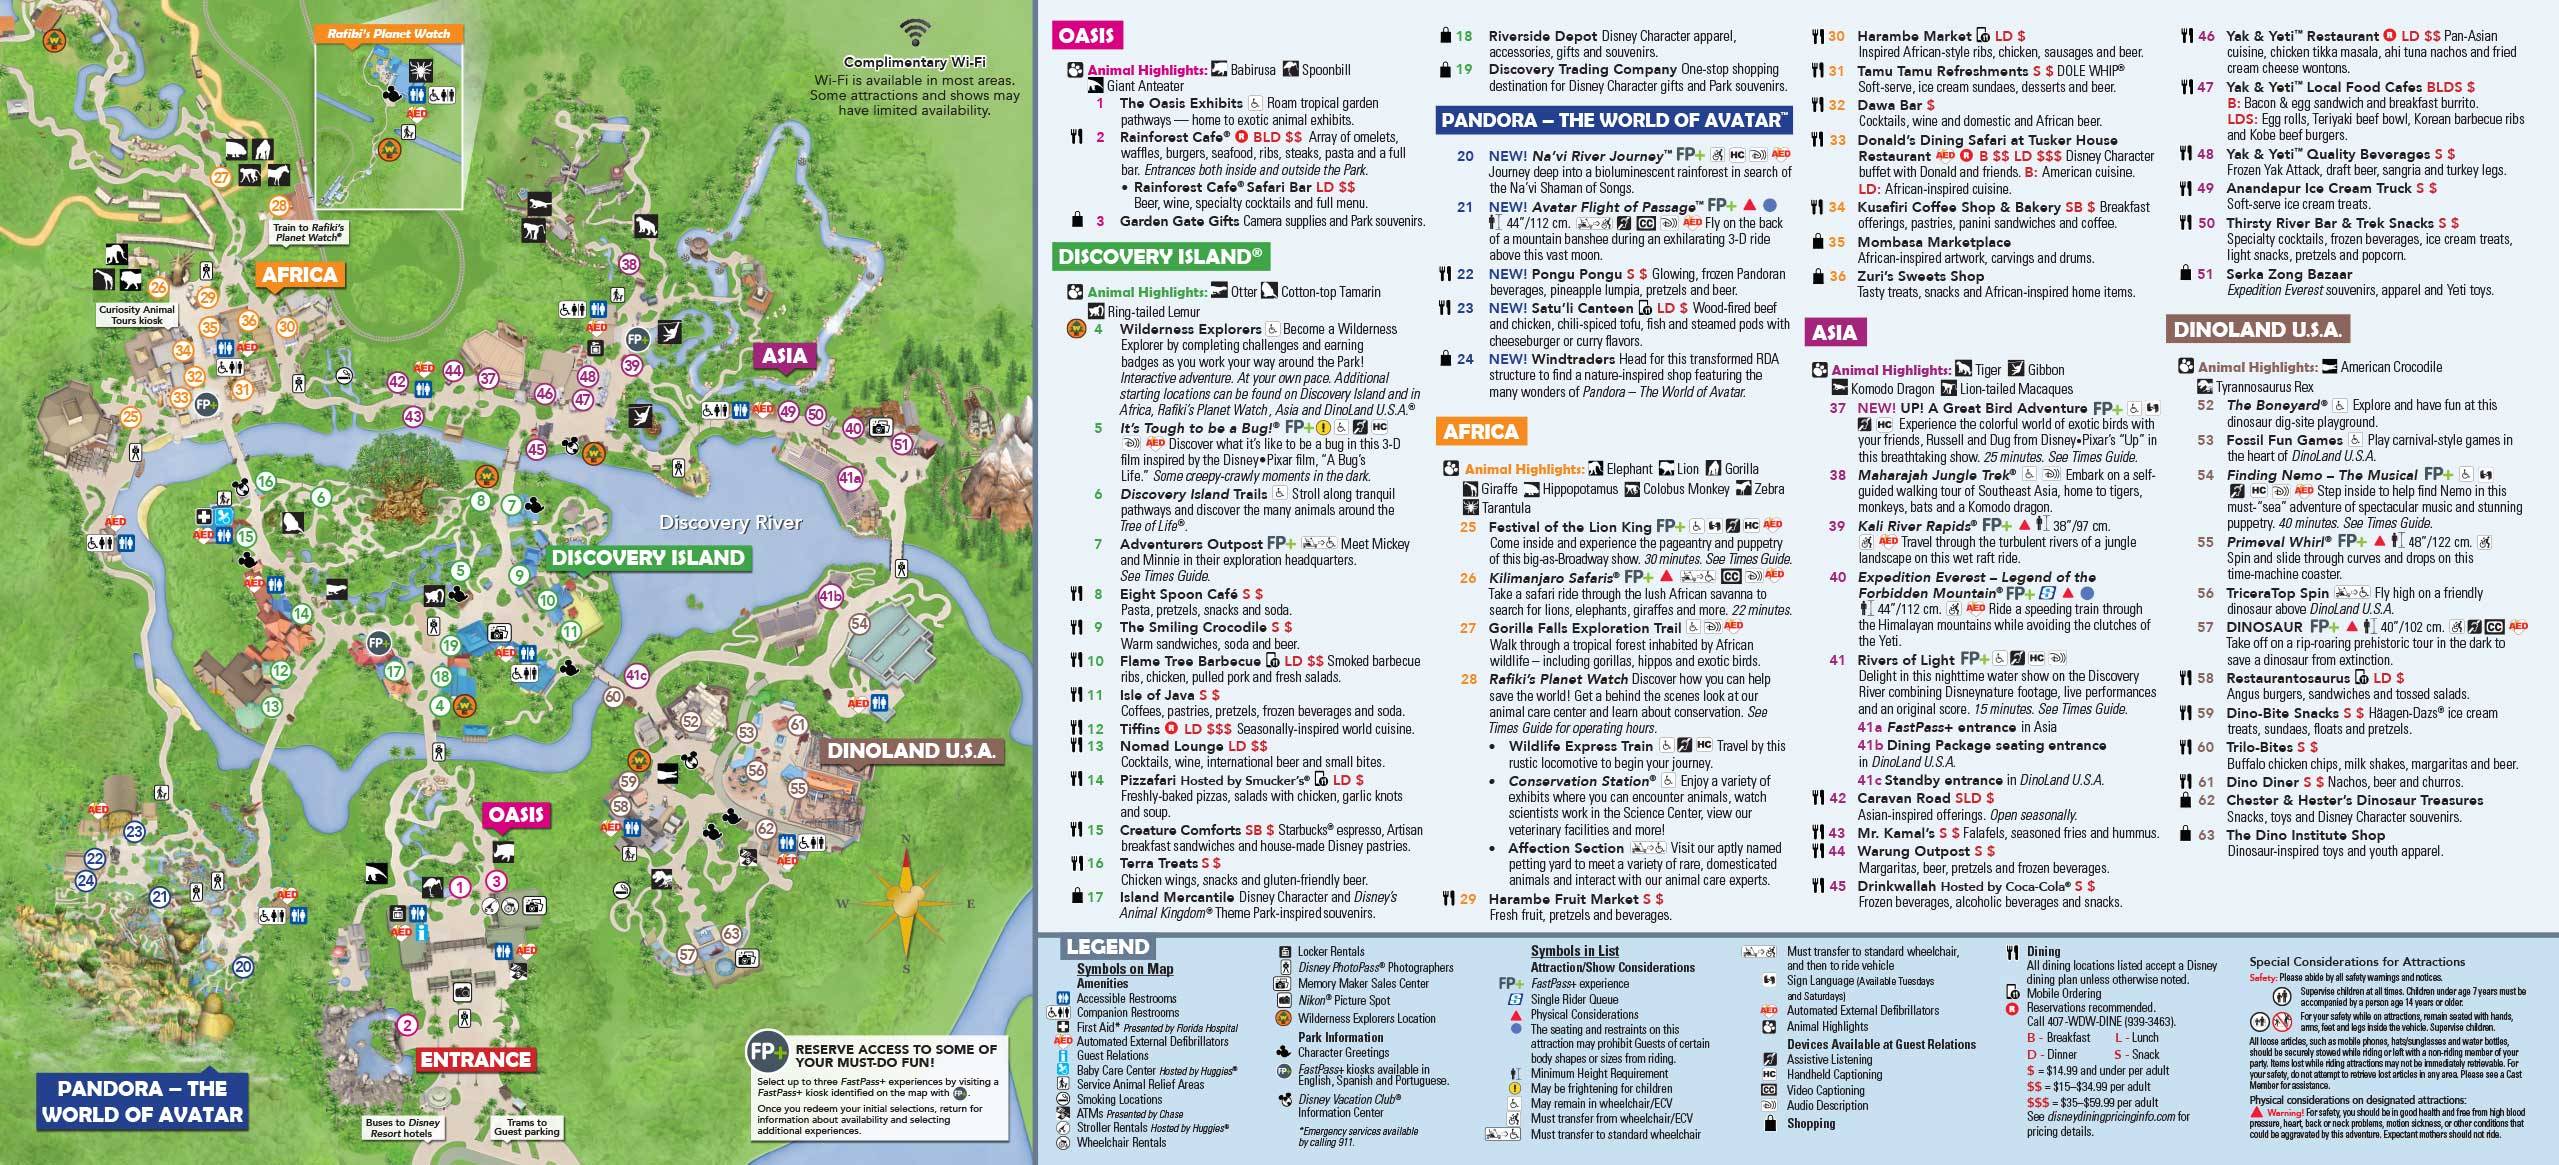 Disney's Animal Kingdom 20th Anniversary guide map - back